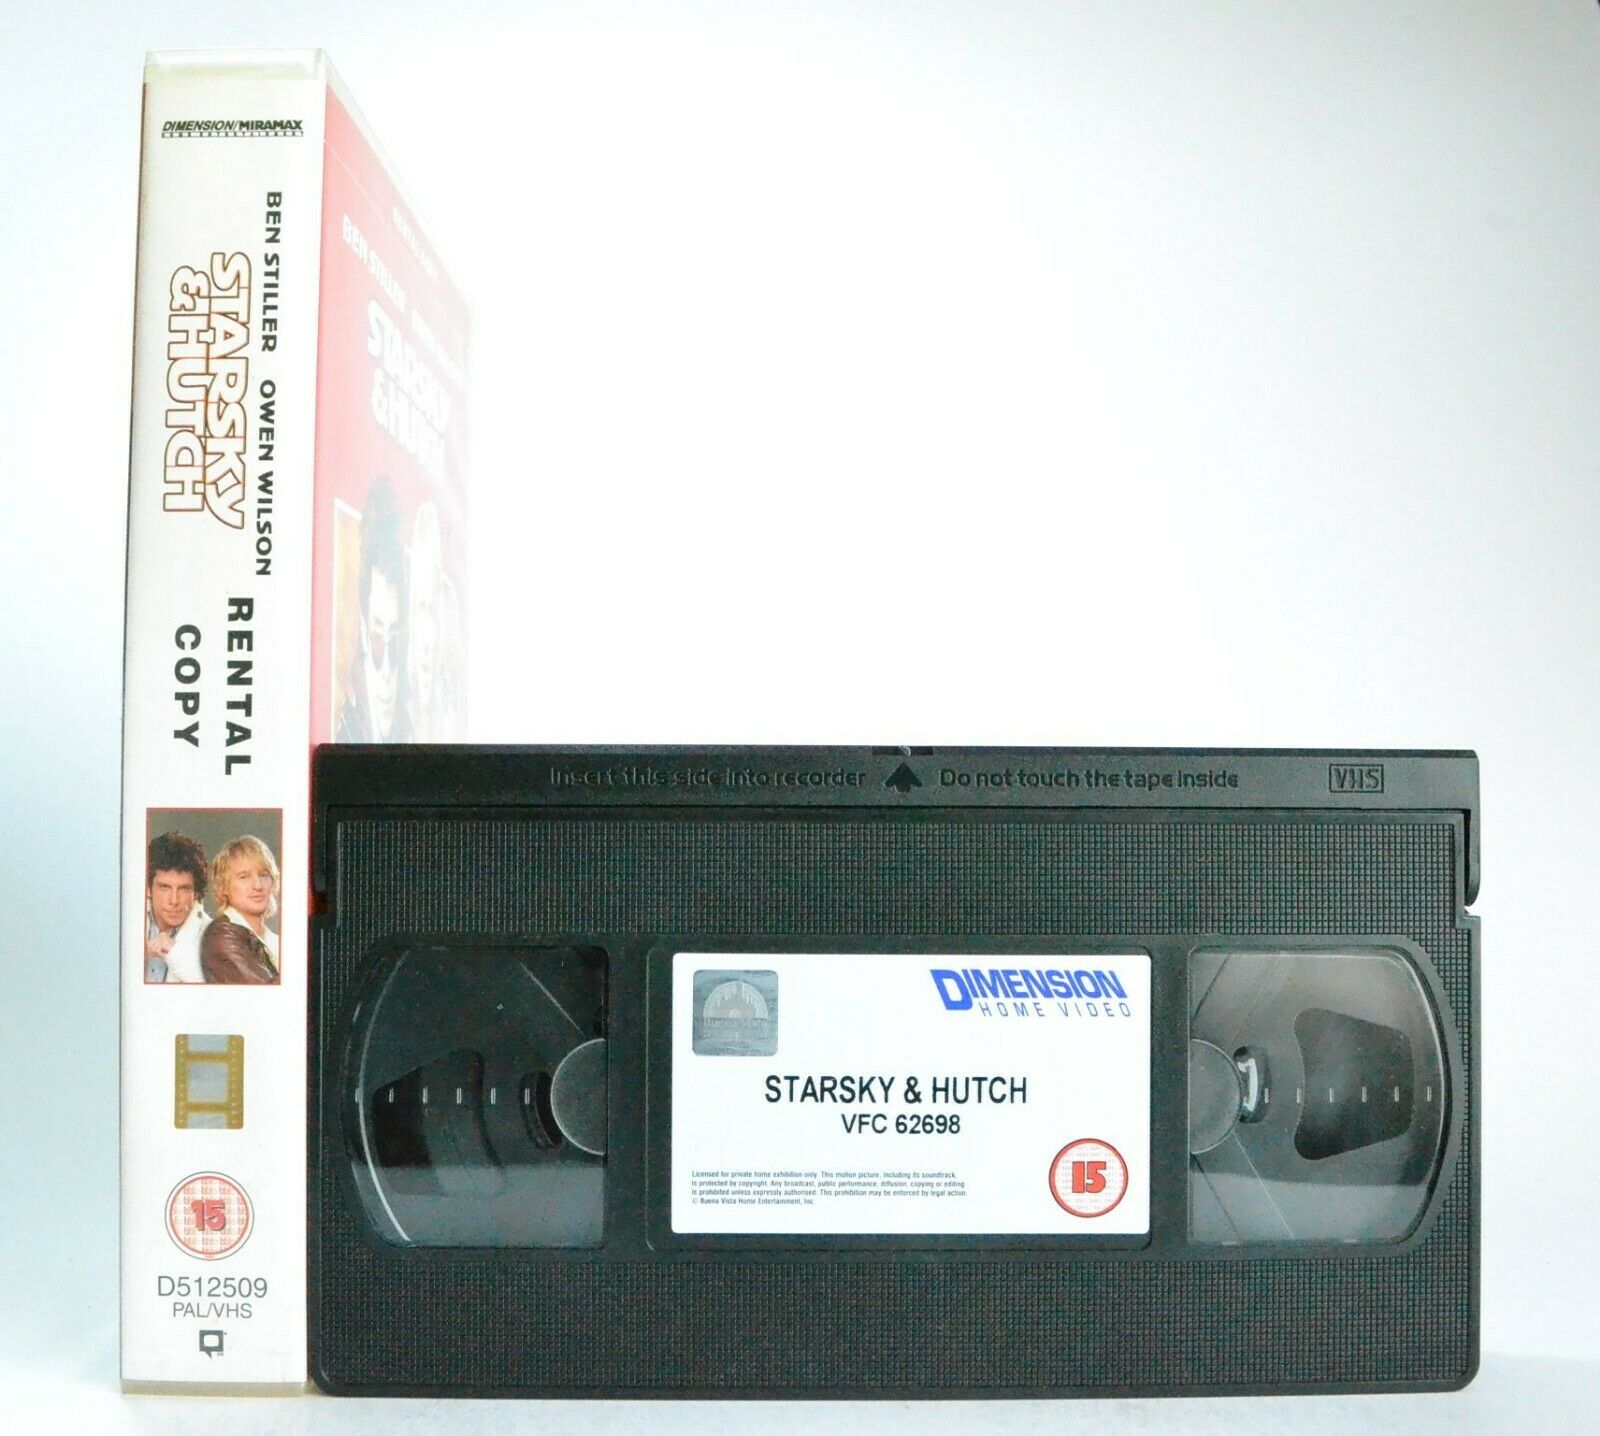 Starsky And Hutch (2004): Buddy Cop Action Comedy - Ben Stiller - Pal VHS-